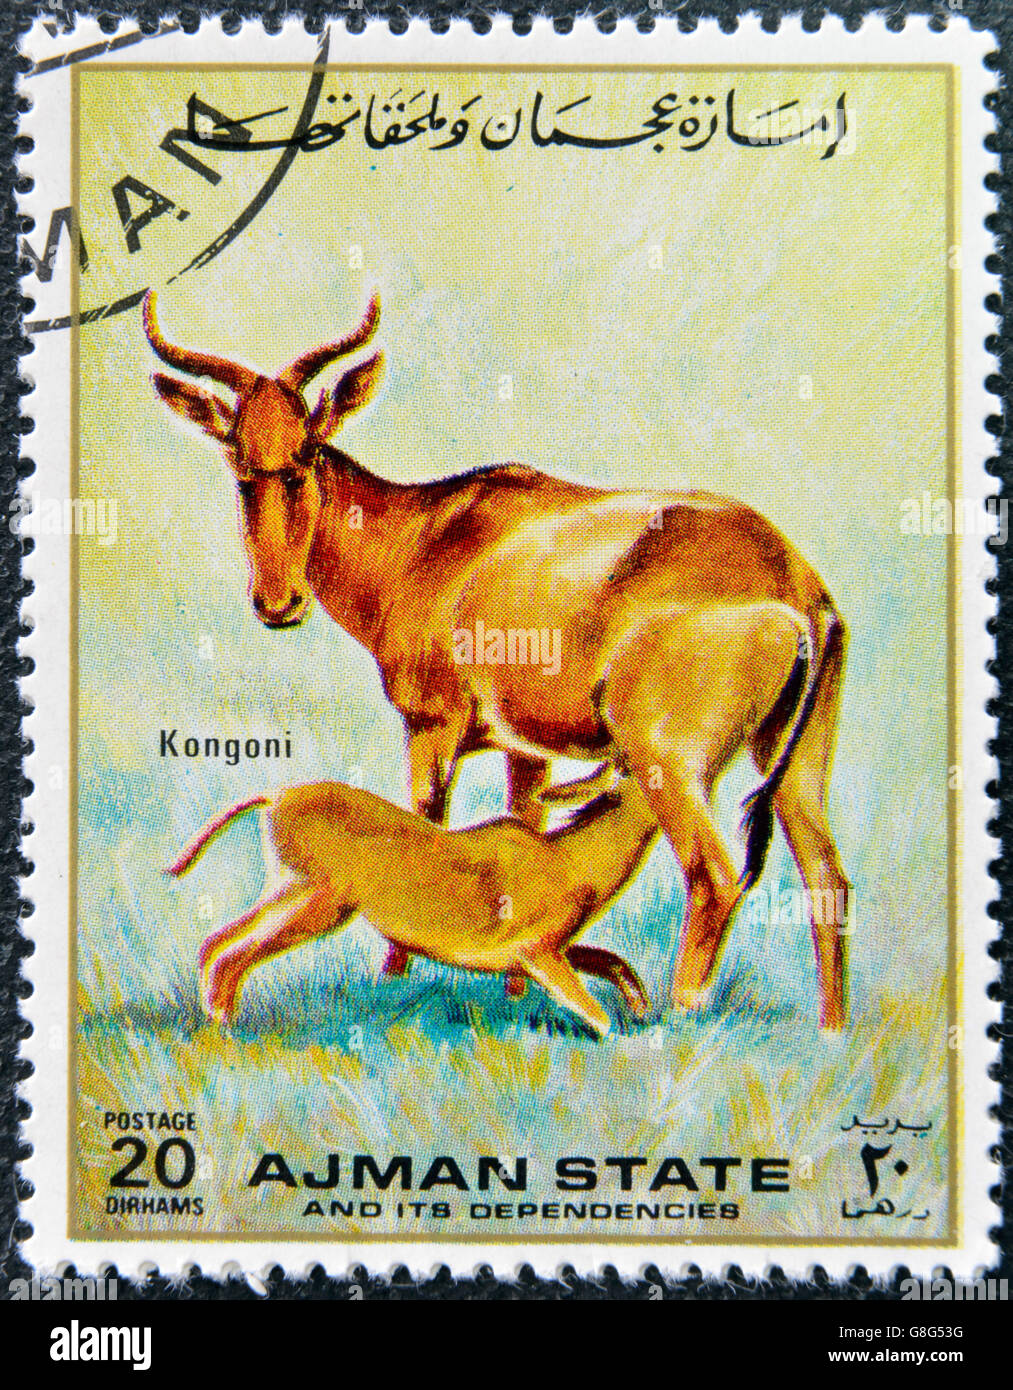 MANAMA AJMAN - CIRCA 1967: a stamp printed in Ajman shows Kongoni, circa 1967 Stock Photo